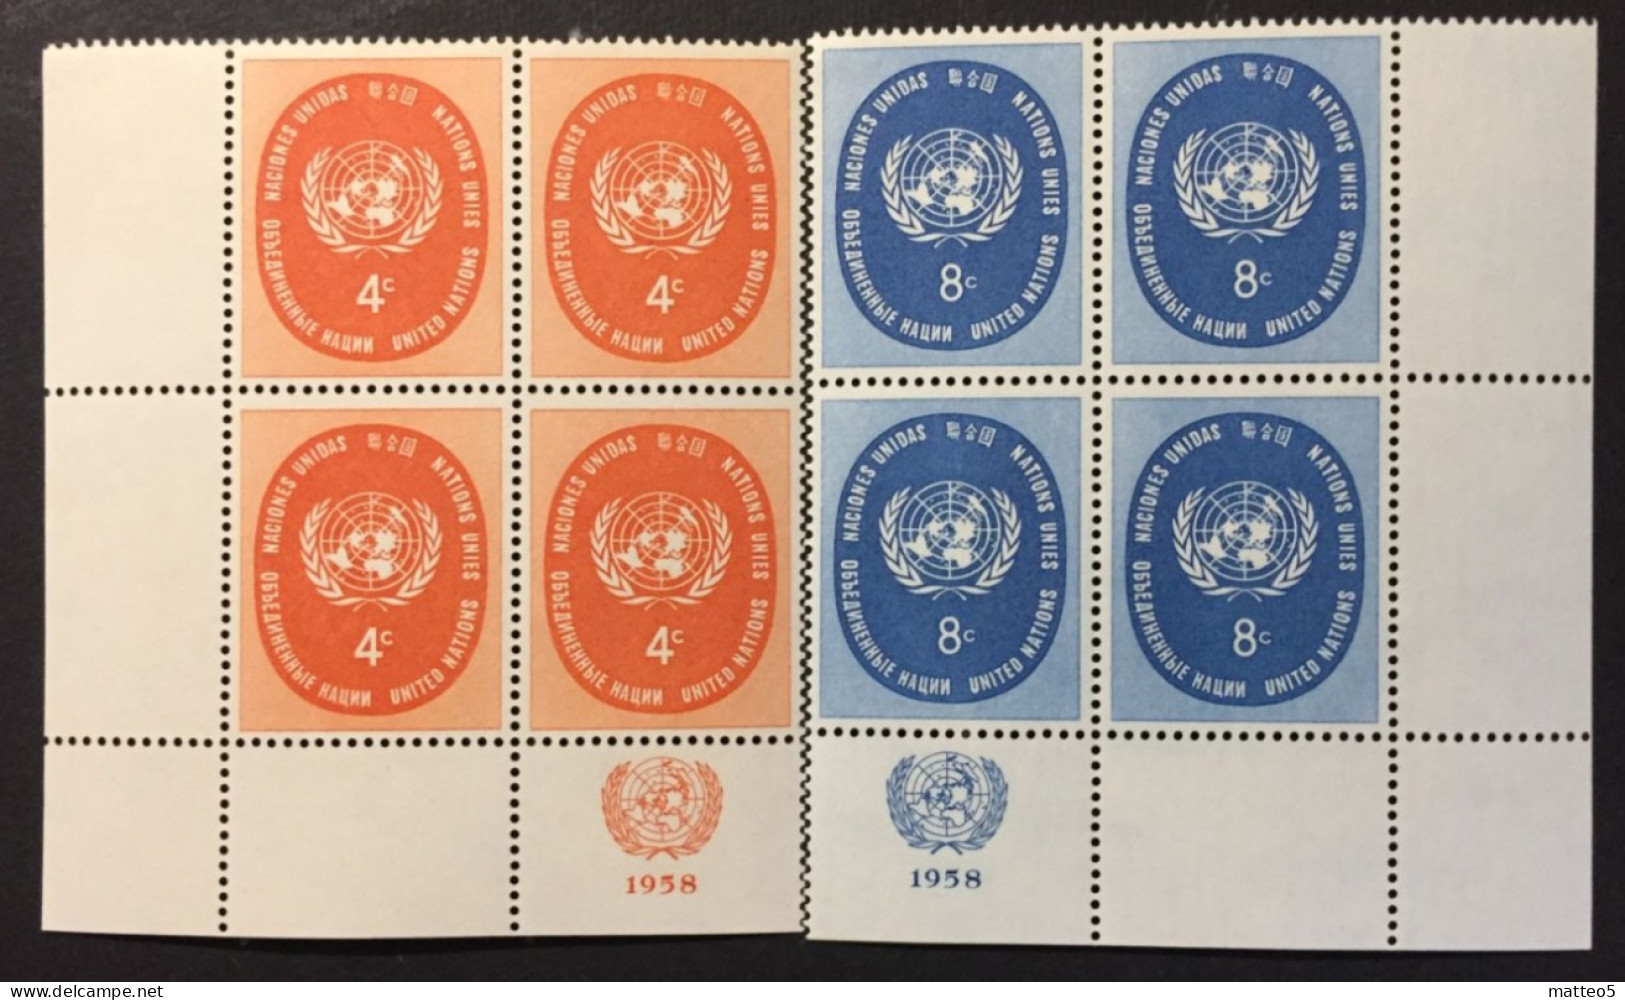 1958 - United Nations UNO UN ONU - UN Symbol - 2 X4 Stamps Unused - Ungebraucht